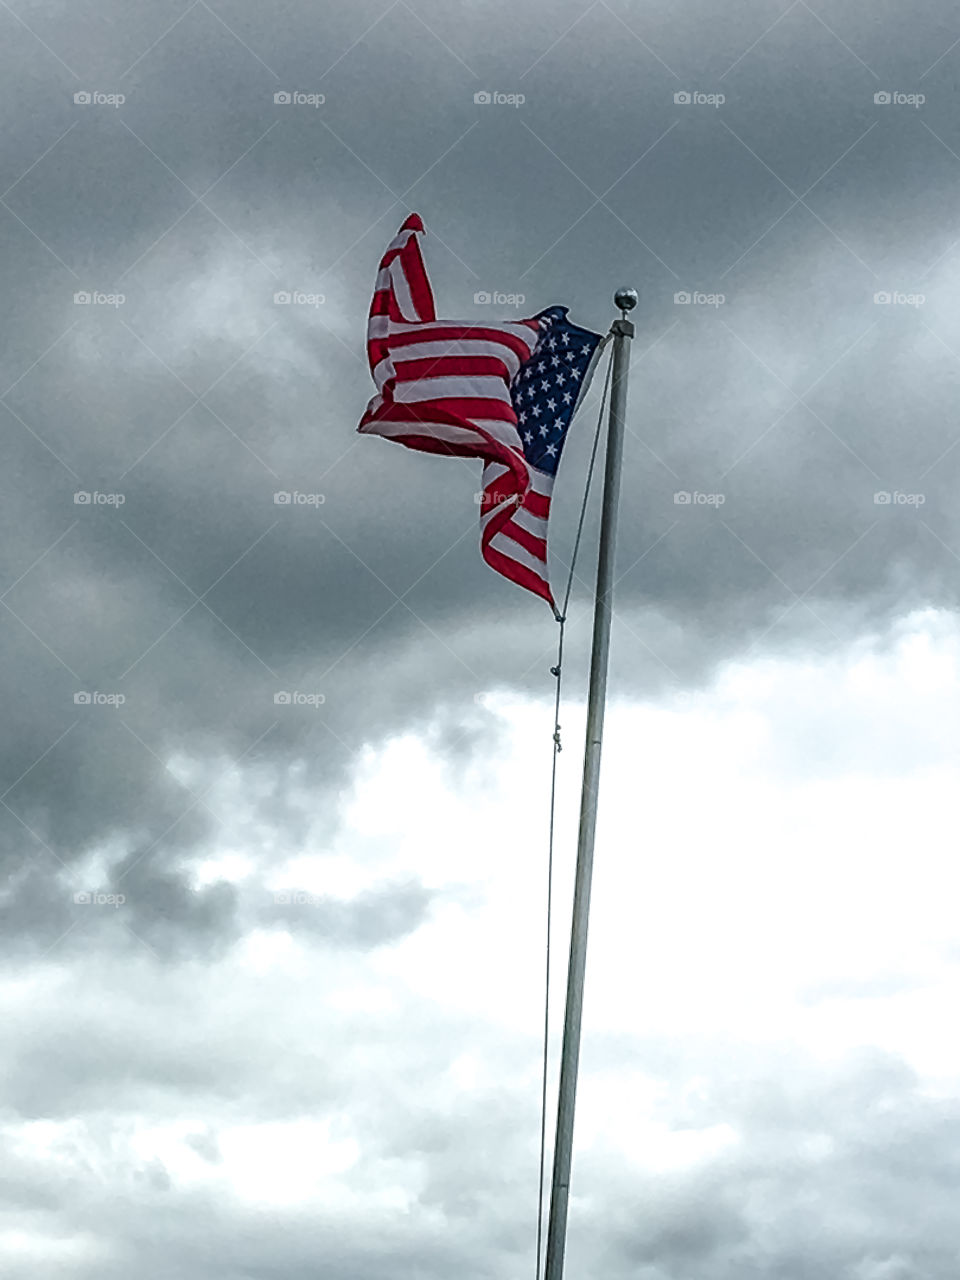 USA flag flying on flagpole during storm